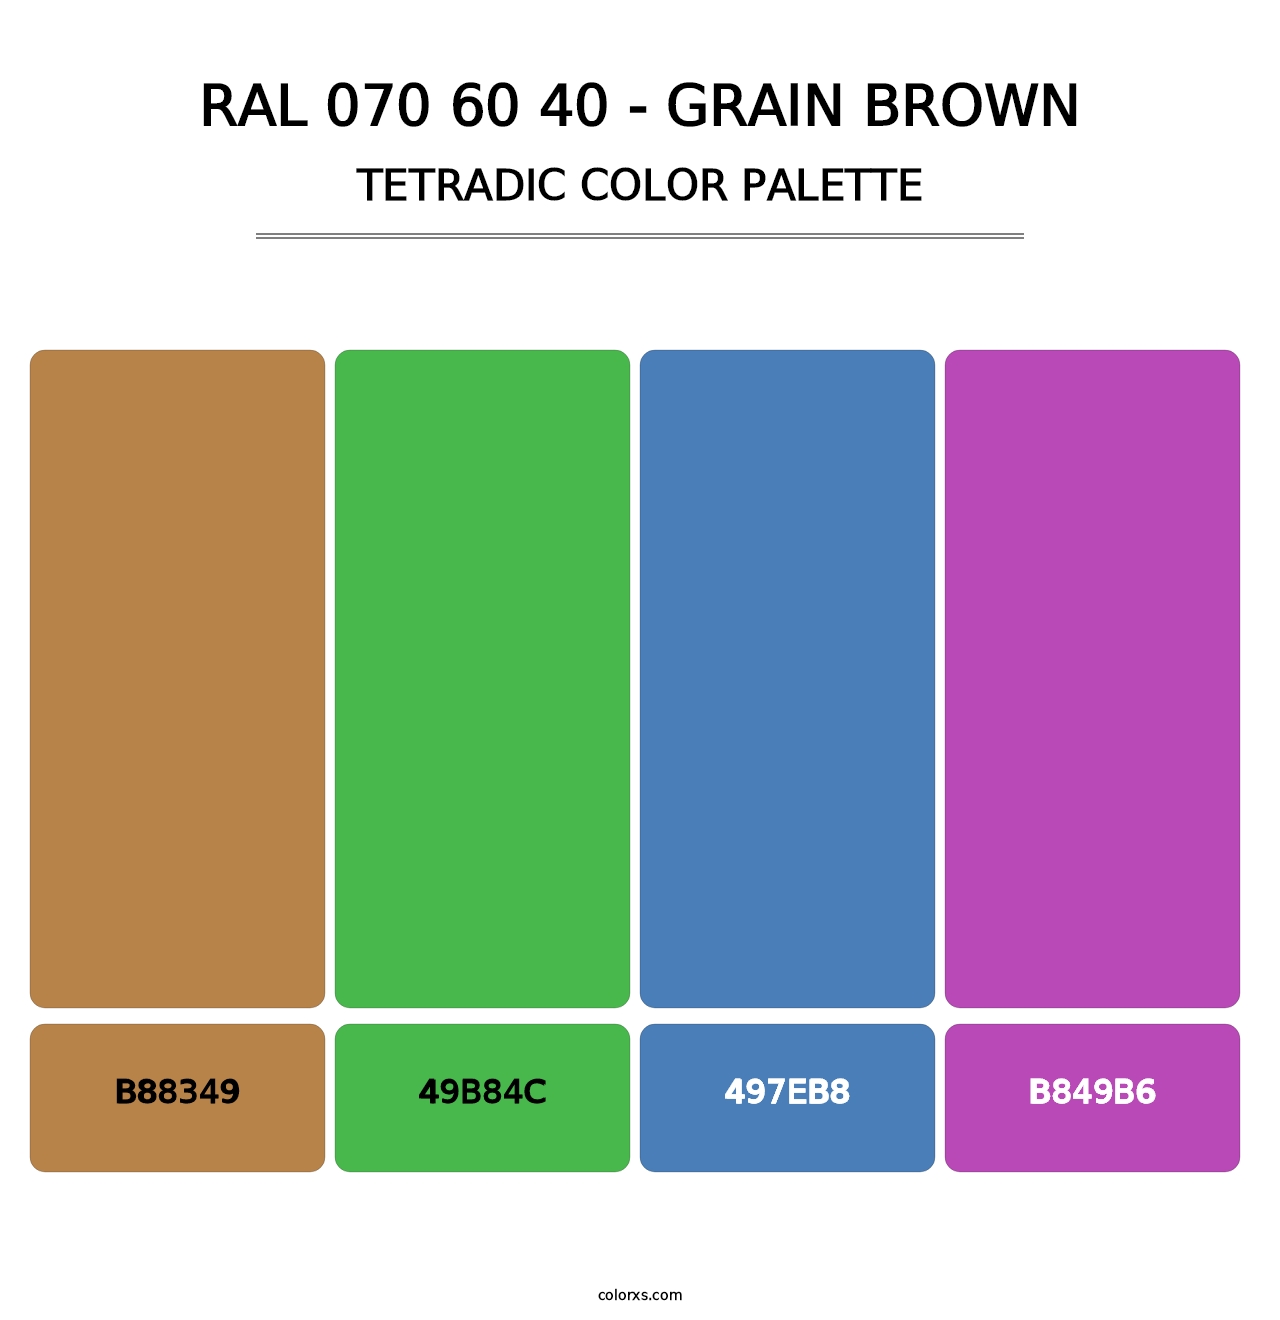 RAL 070 60 40 - Grain Brown - Tetradic Color Palette